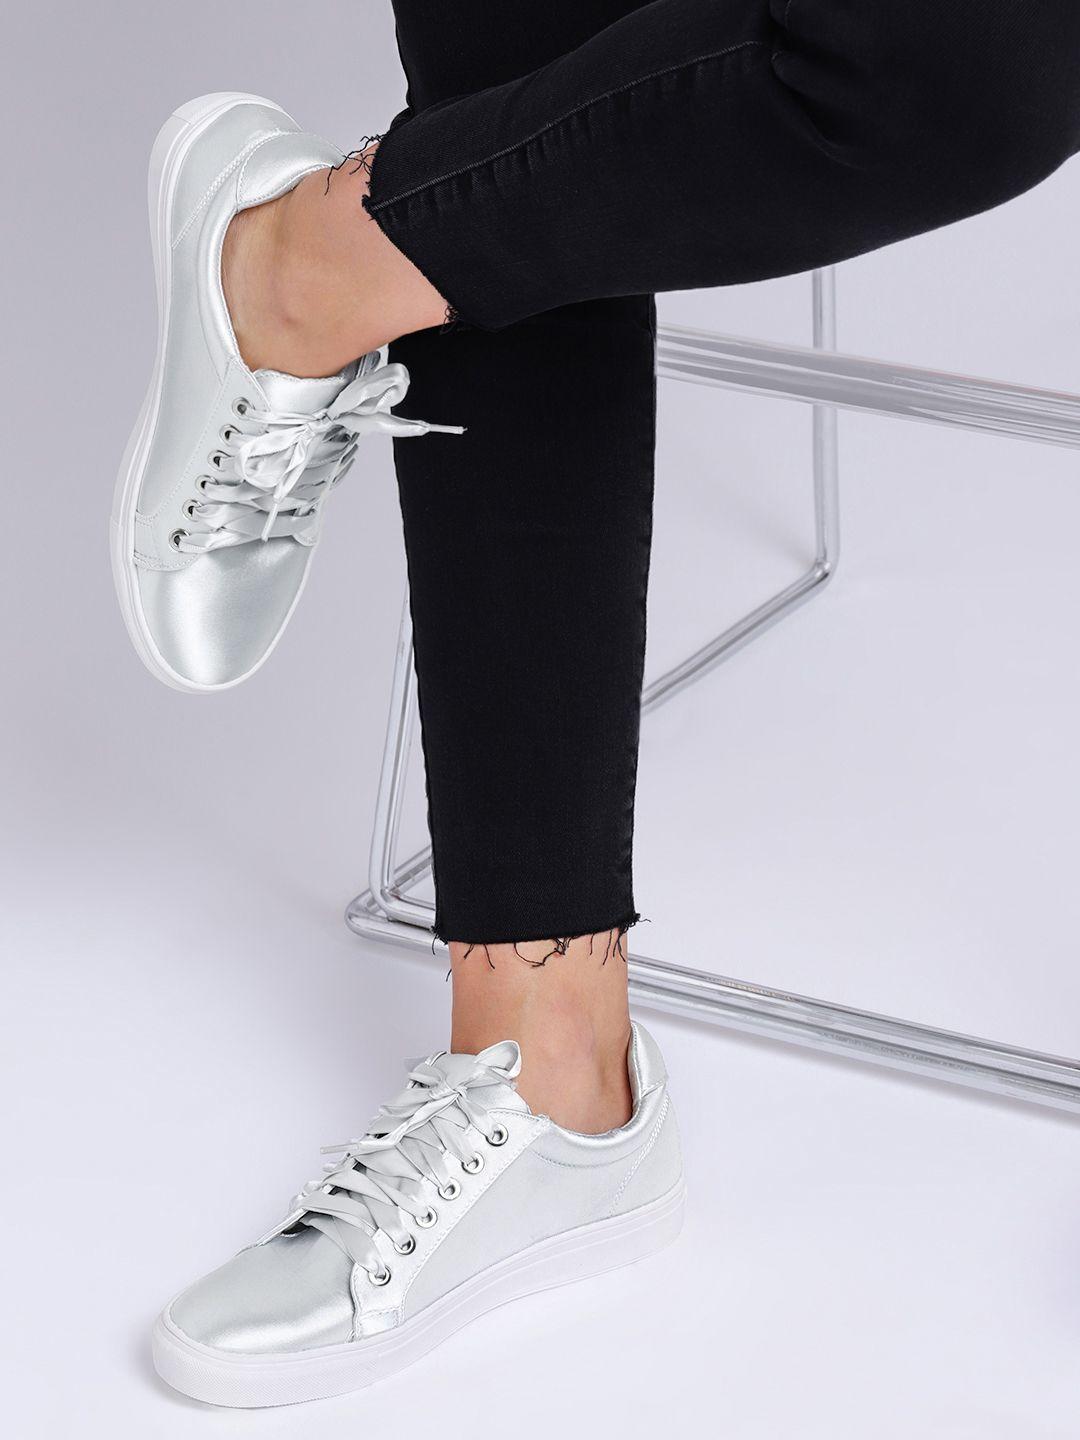 corsica women silver-toned sneakers